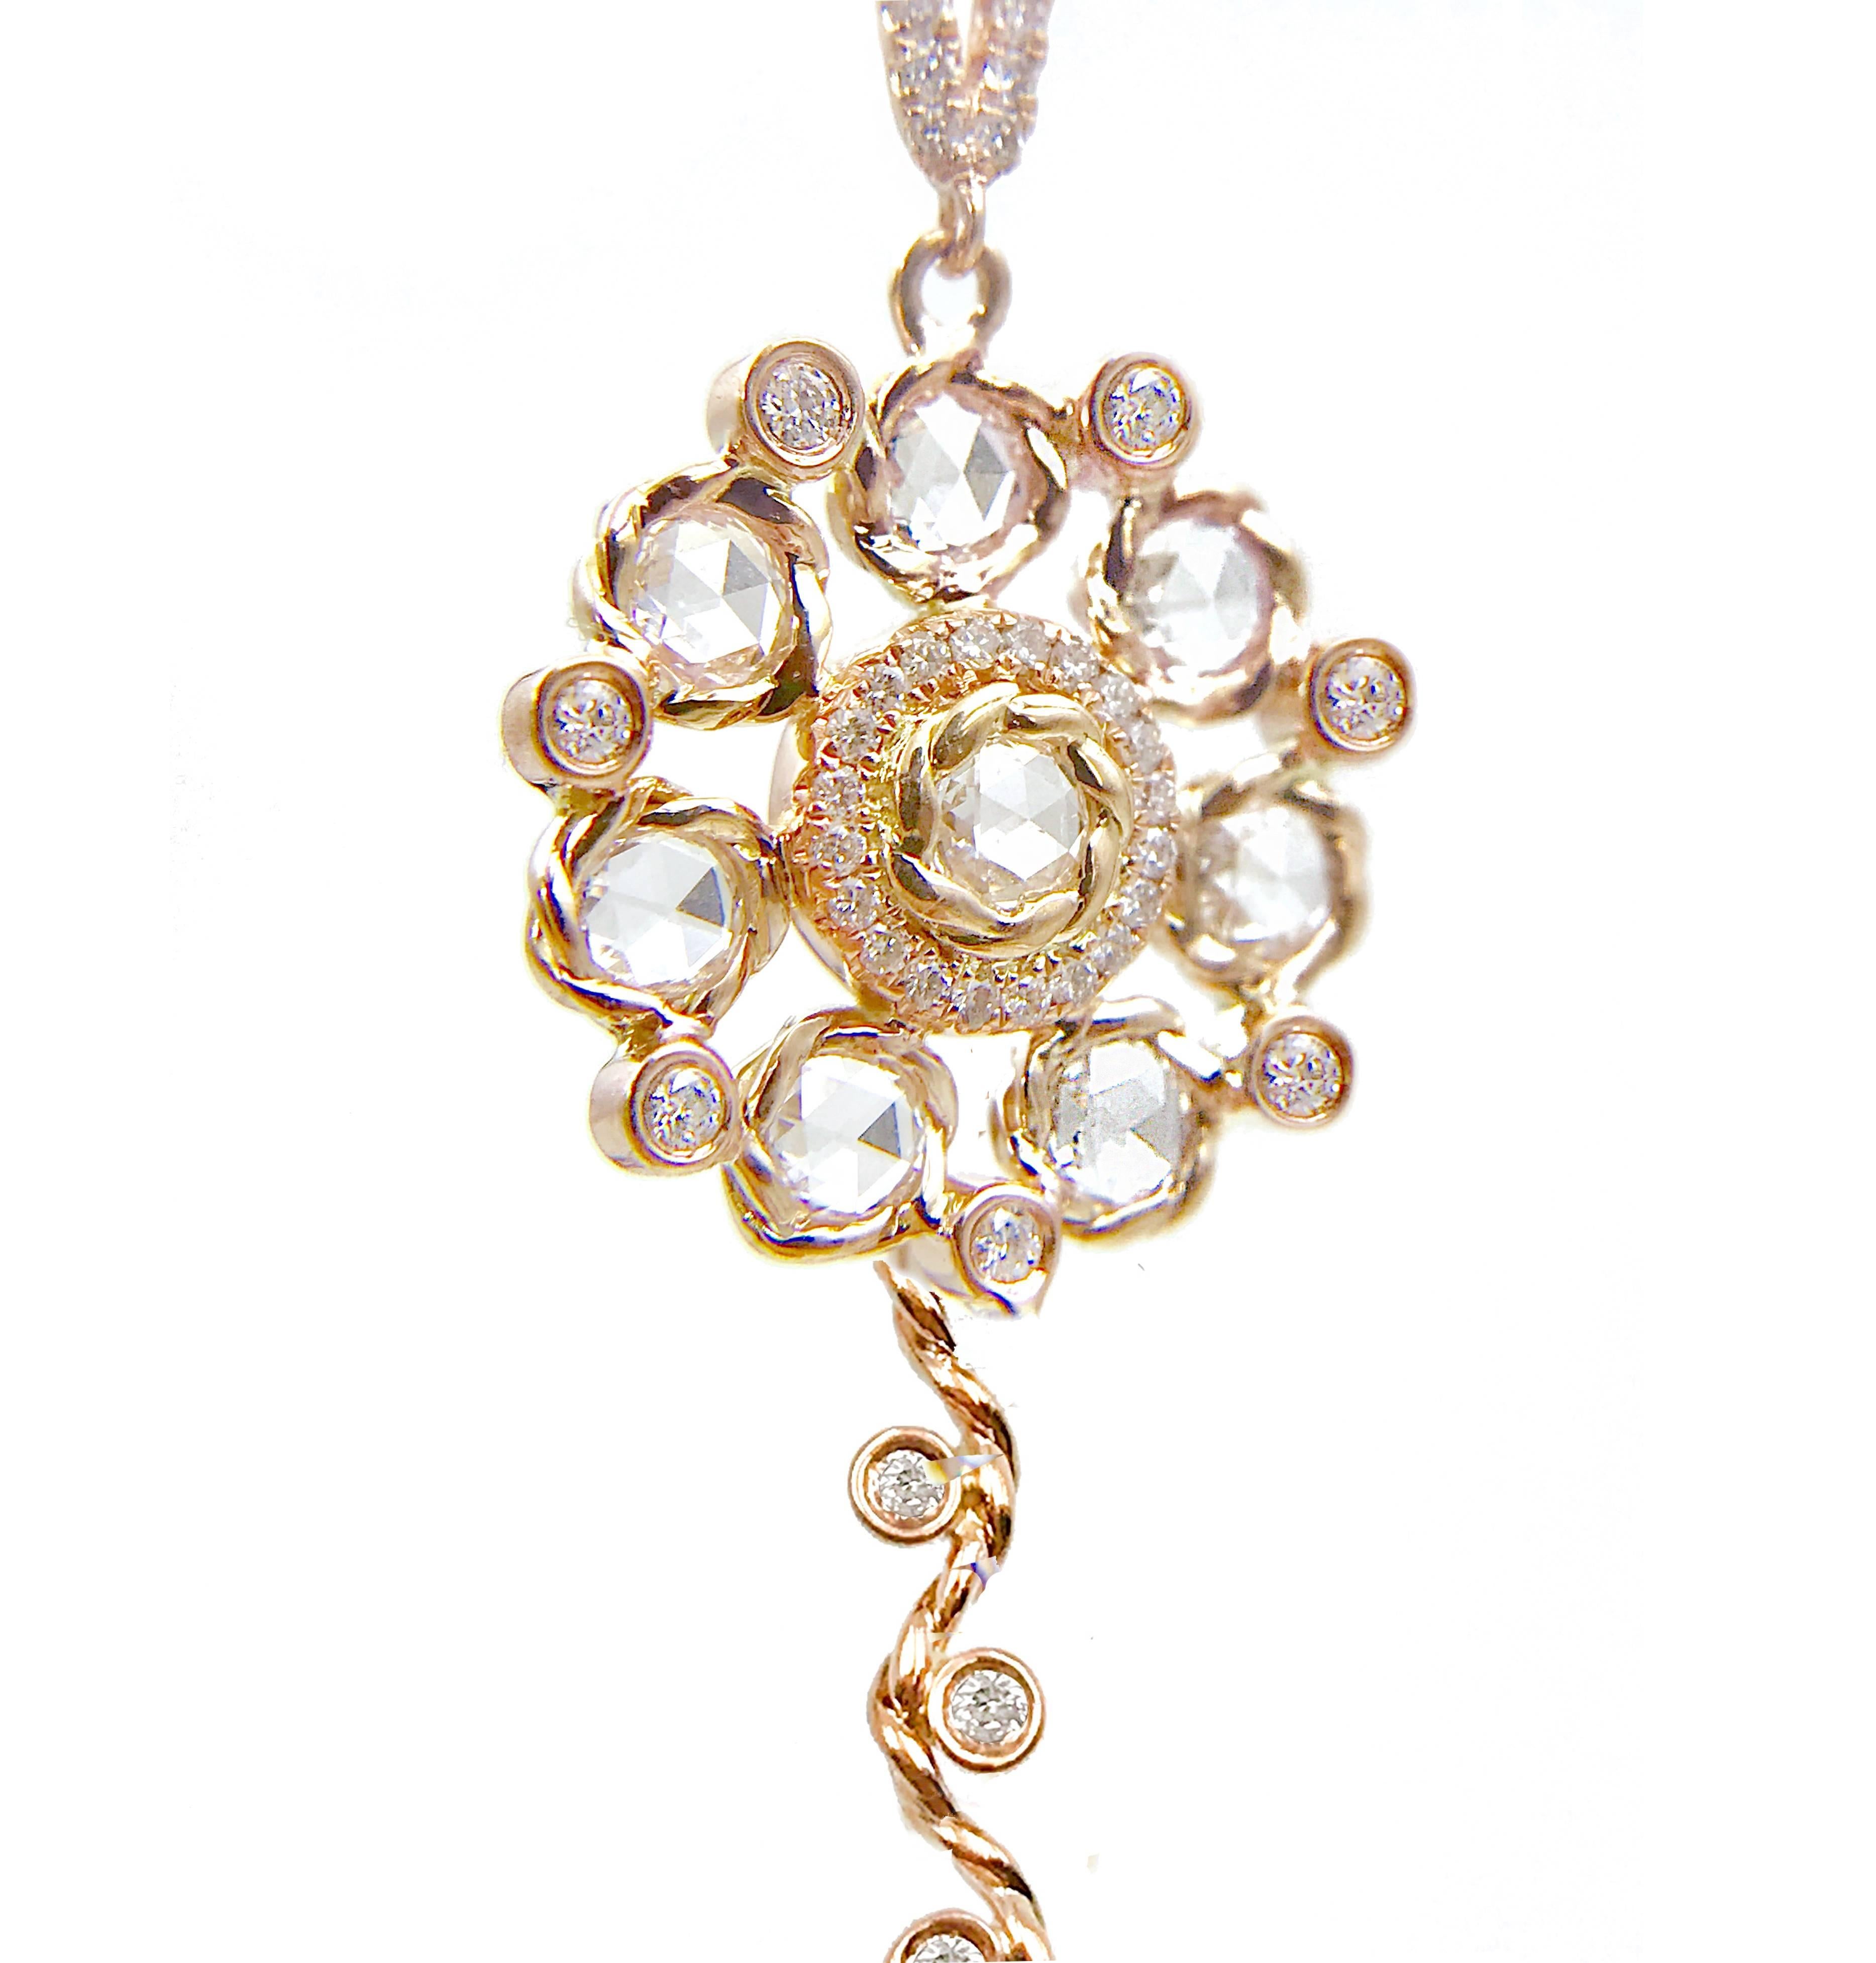 Persephone 14 Karat White Gold Rose Cut Diamond Floral Pendant Necklace For Sale 10